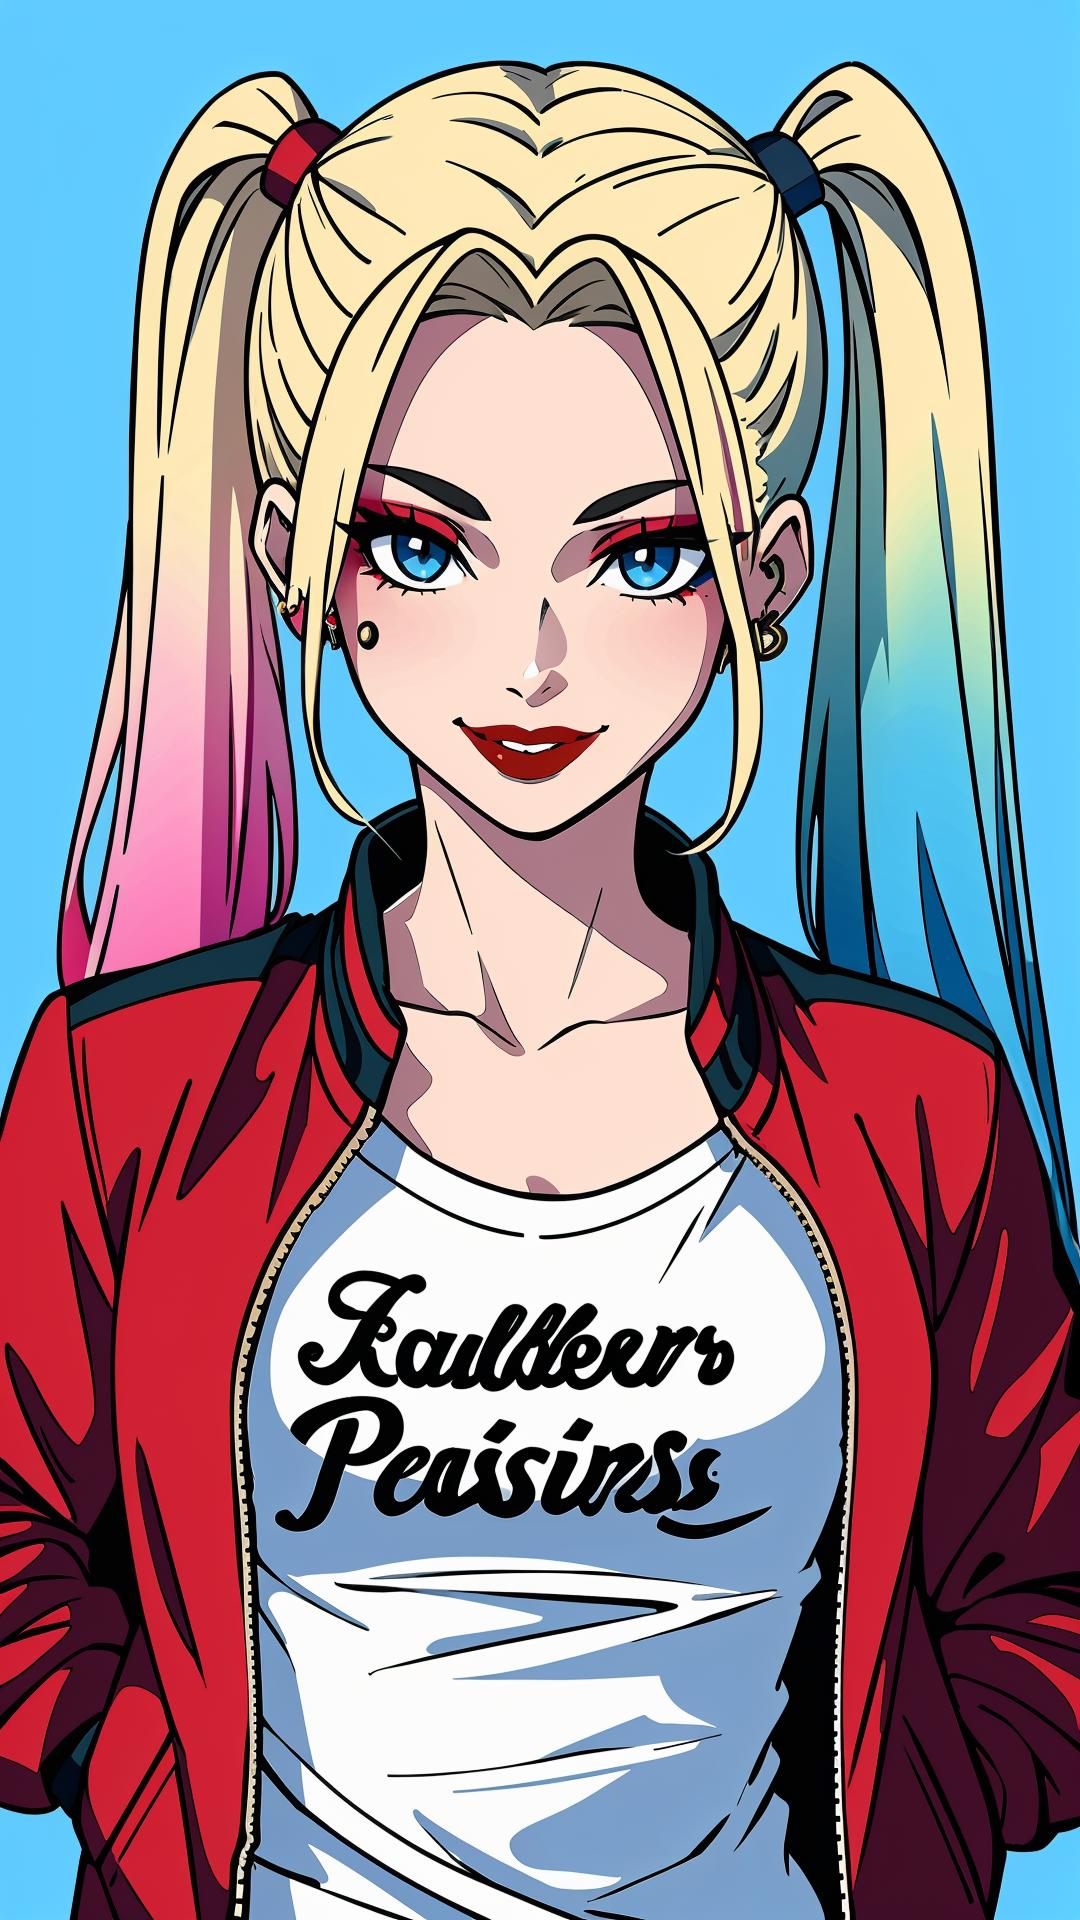 Harley Quinn | Suicide Squad image by lsdniubi477